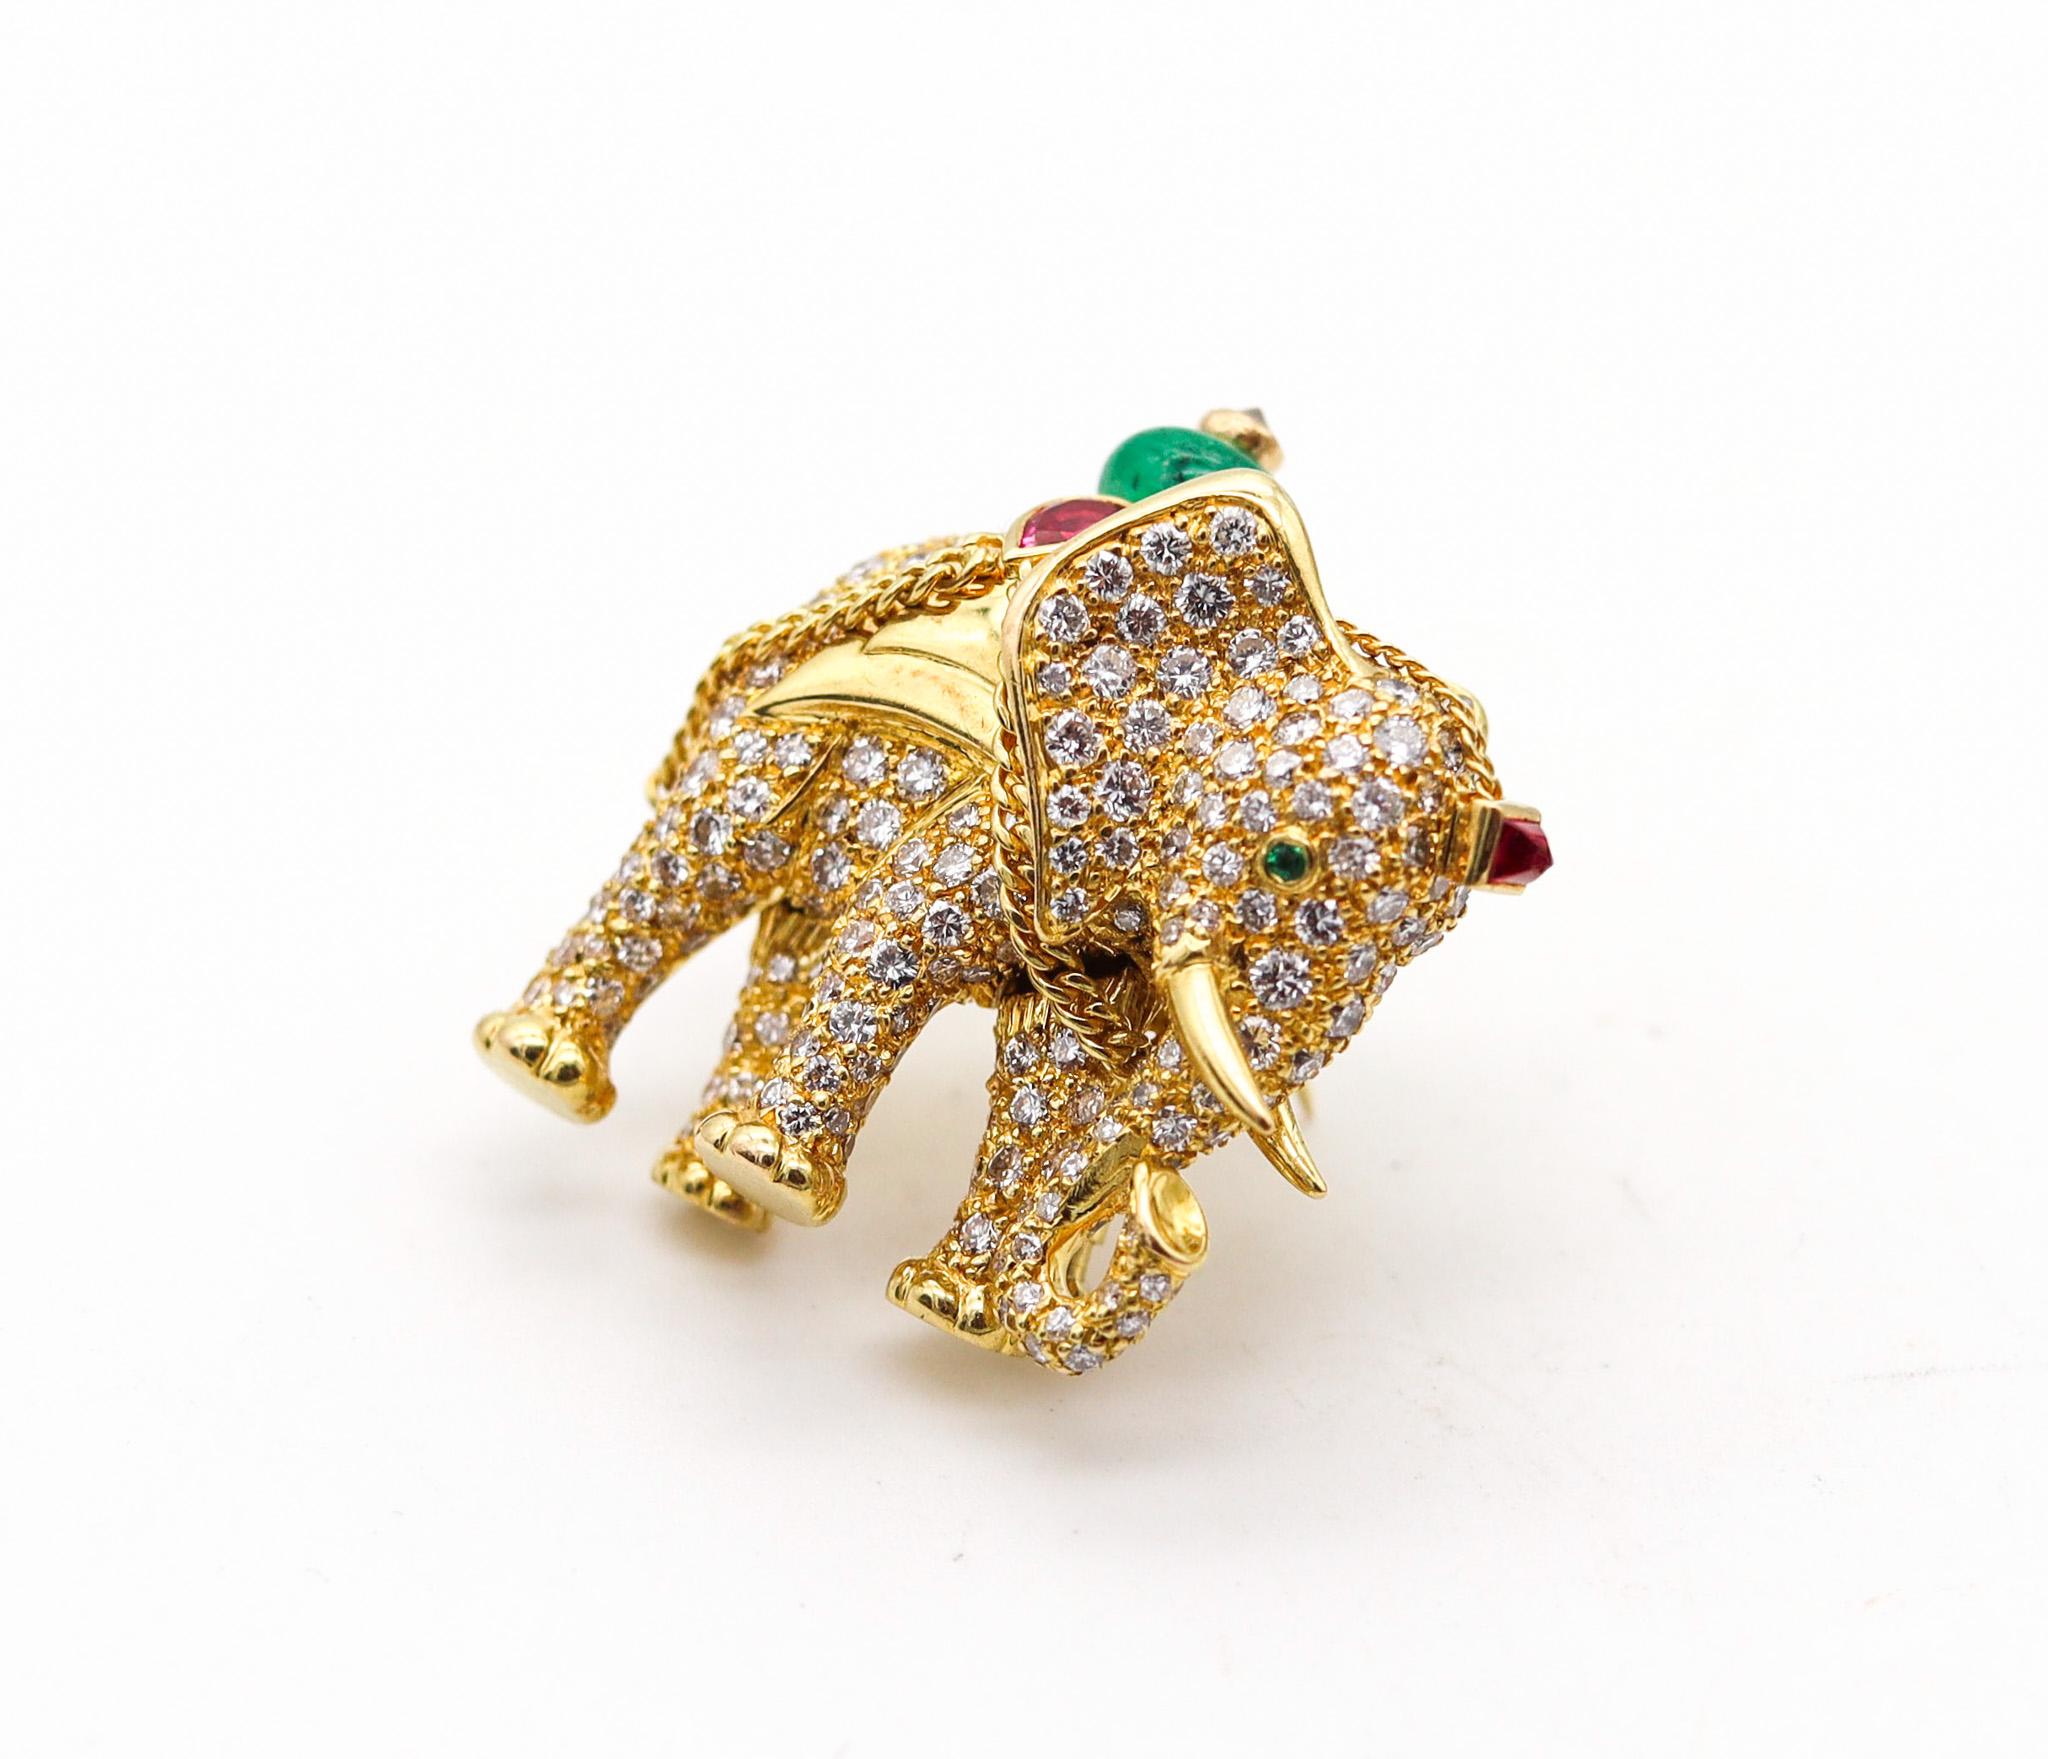 Modernist Cartier Paris Elephant Brooch 18Kt Gold With 5.24 Ctw Diamonds Emeralds & Rubies For Sale